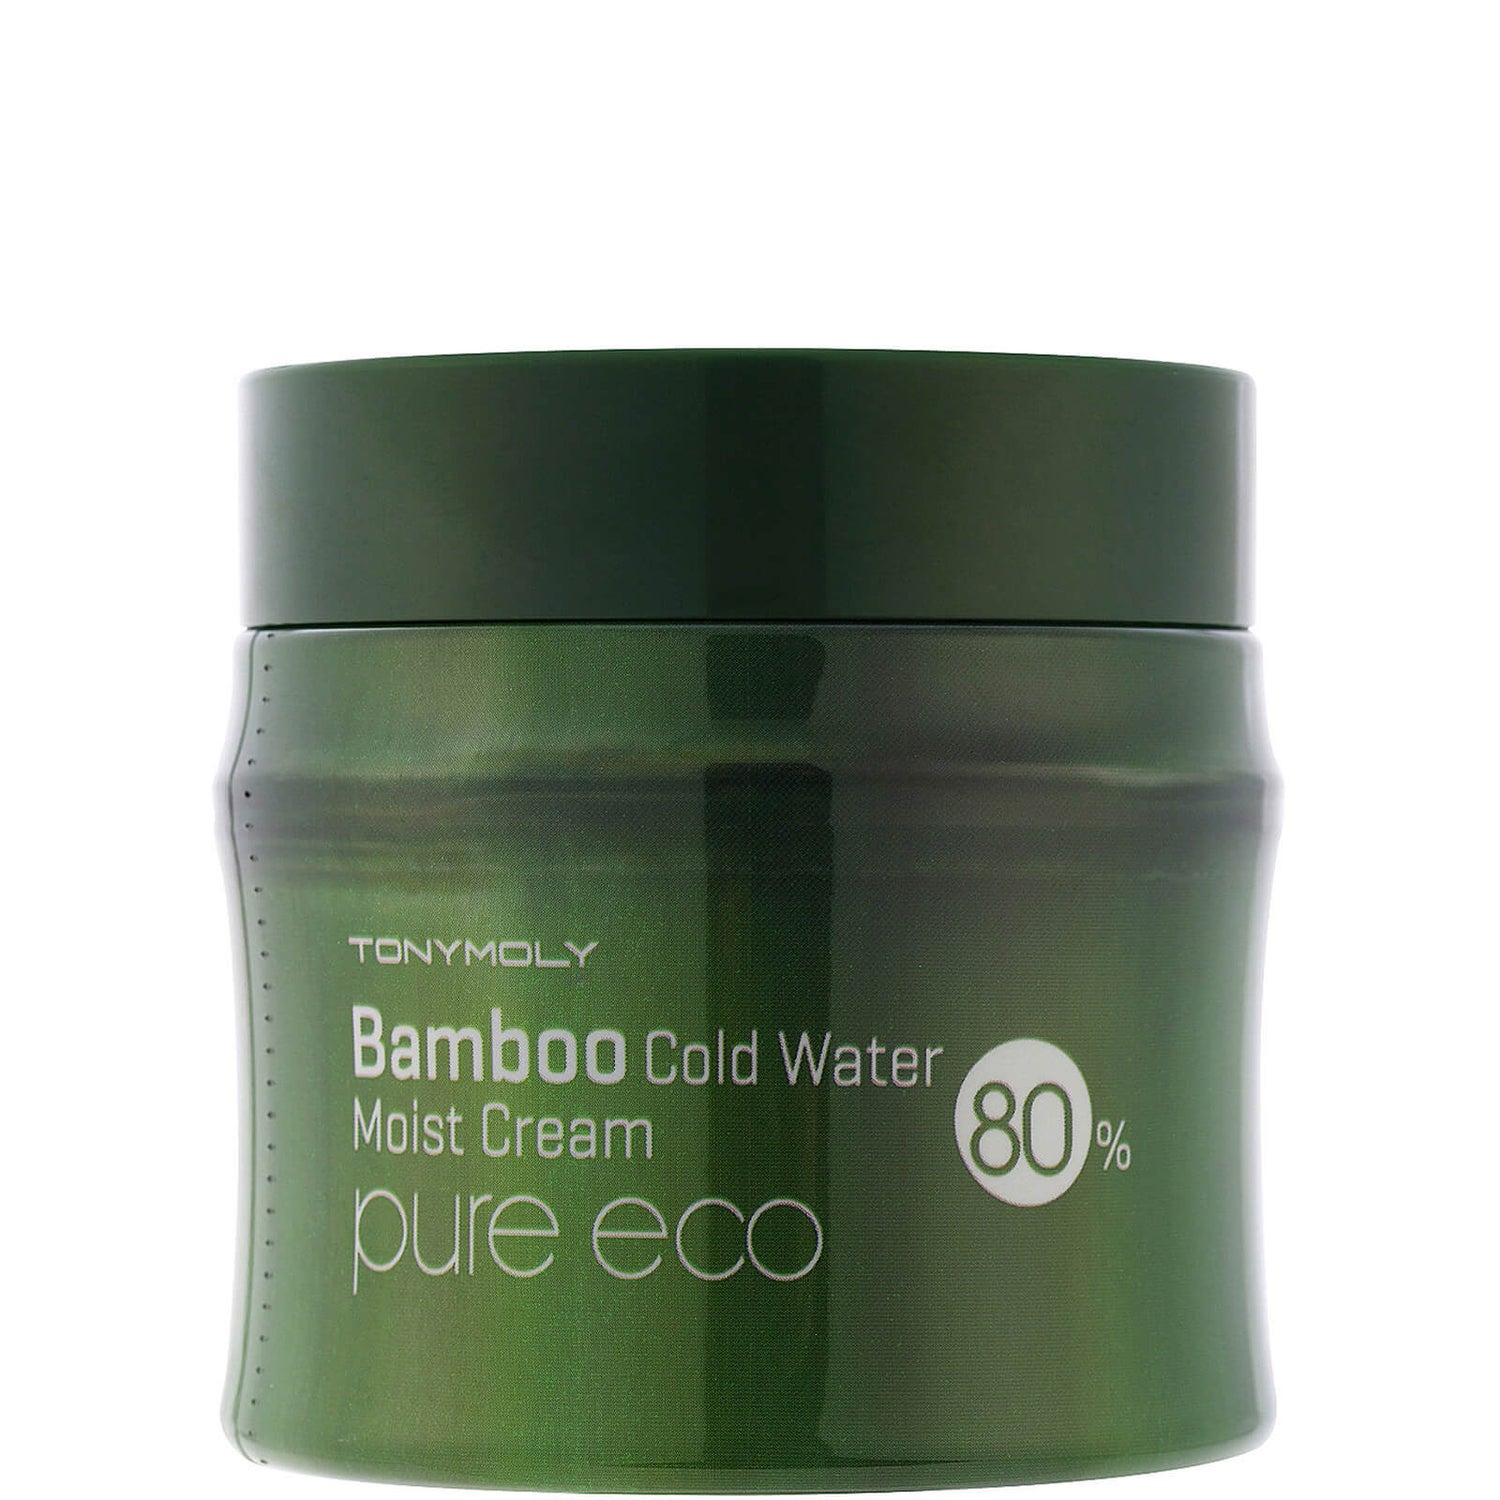 TONYMOLY Pure Eco Bamboo Cold Water Moist Cream